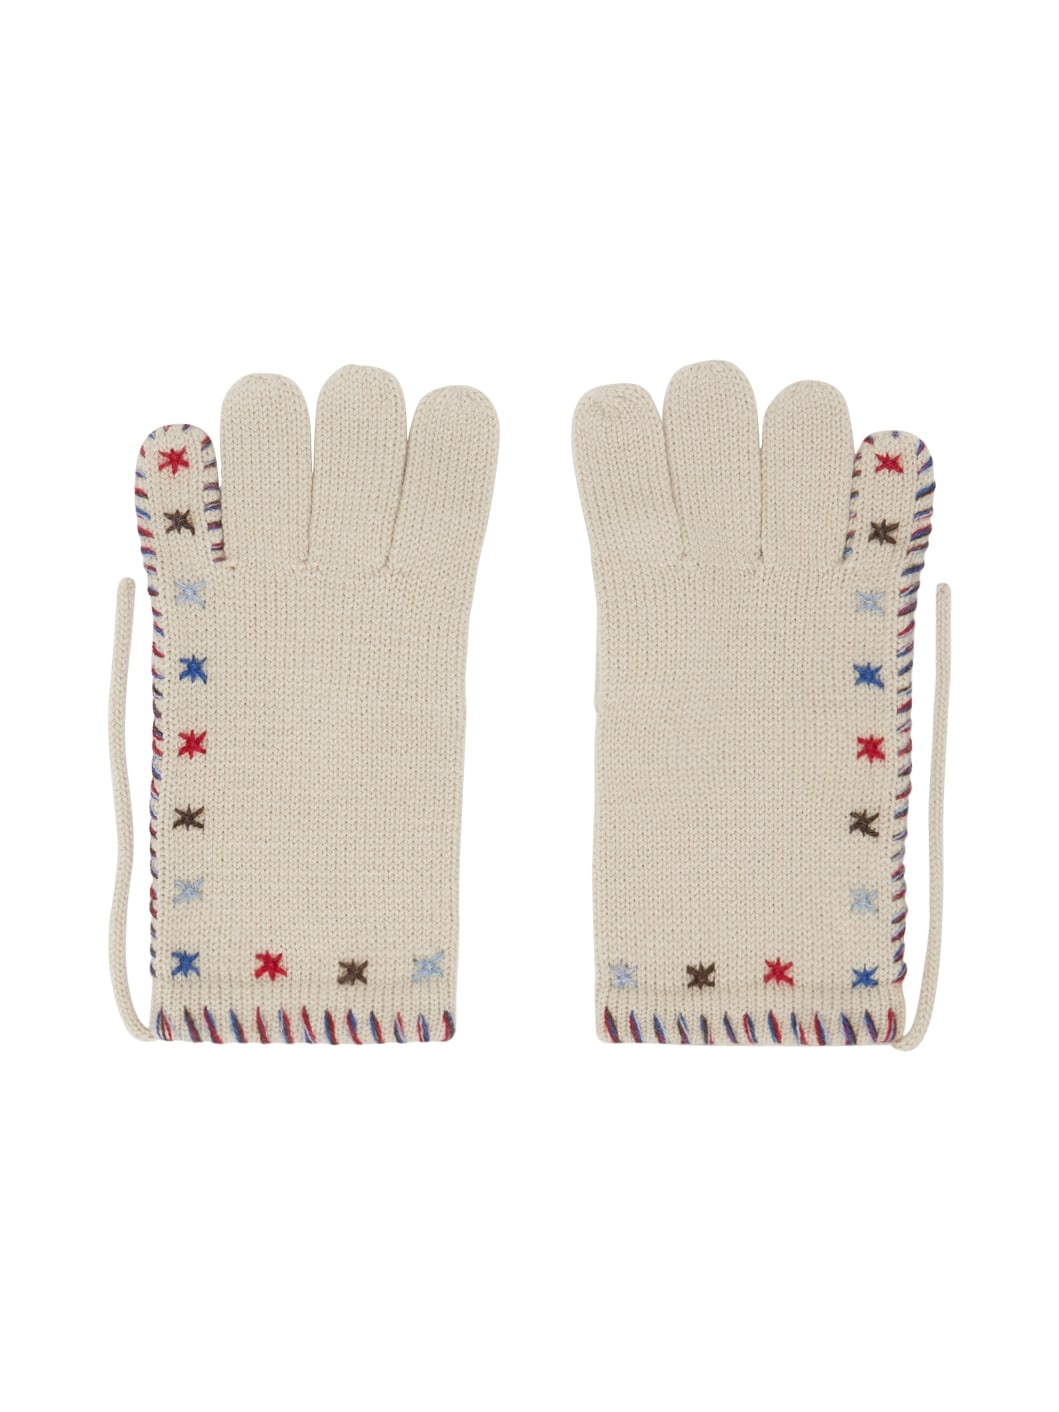 Off-White Tiny Star Gloves - 1